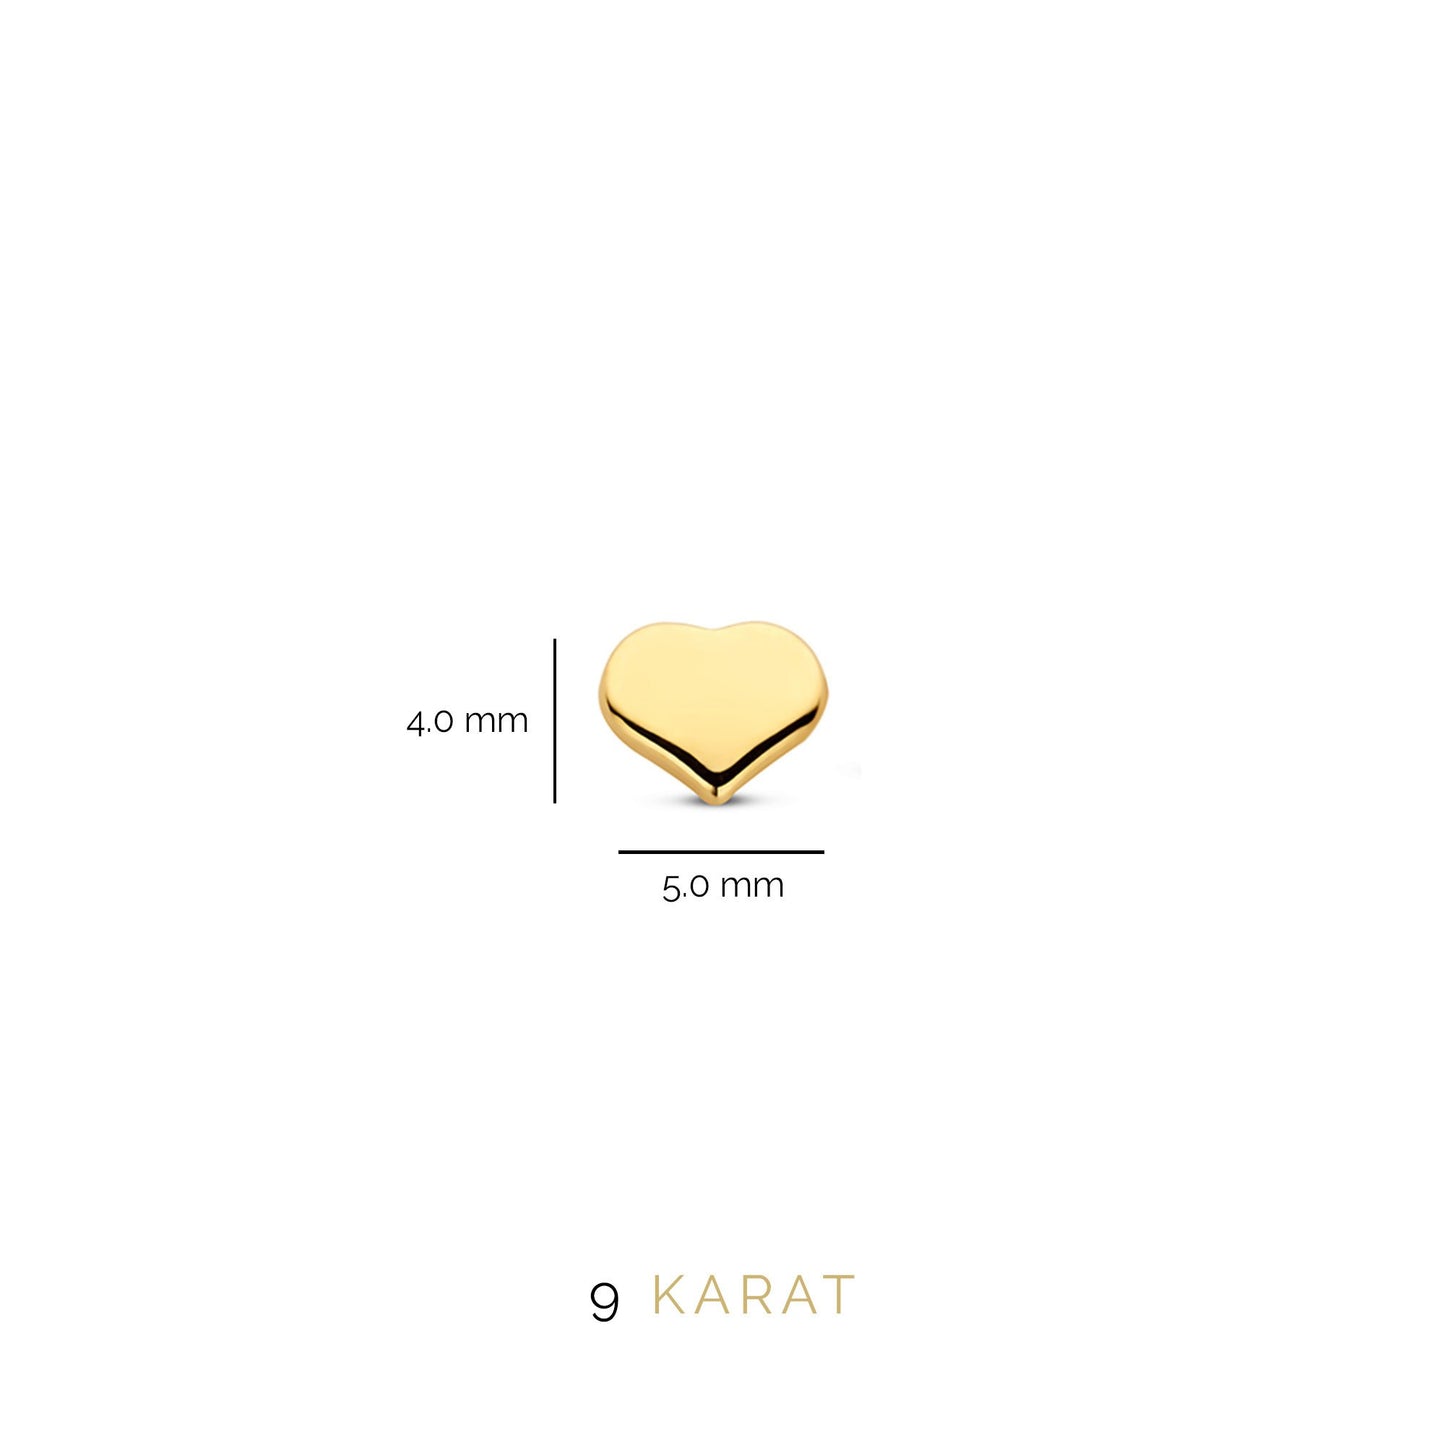 Della Spiga Giulietta 9 karat gold ear studs with heart